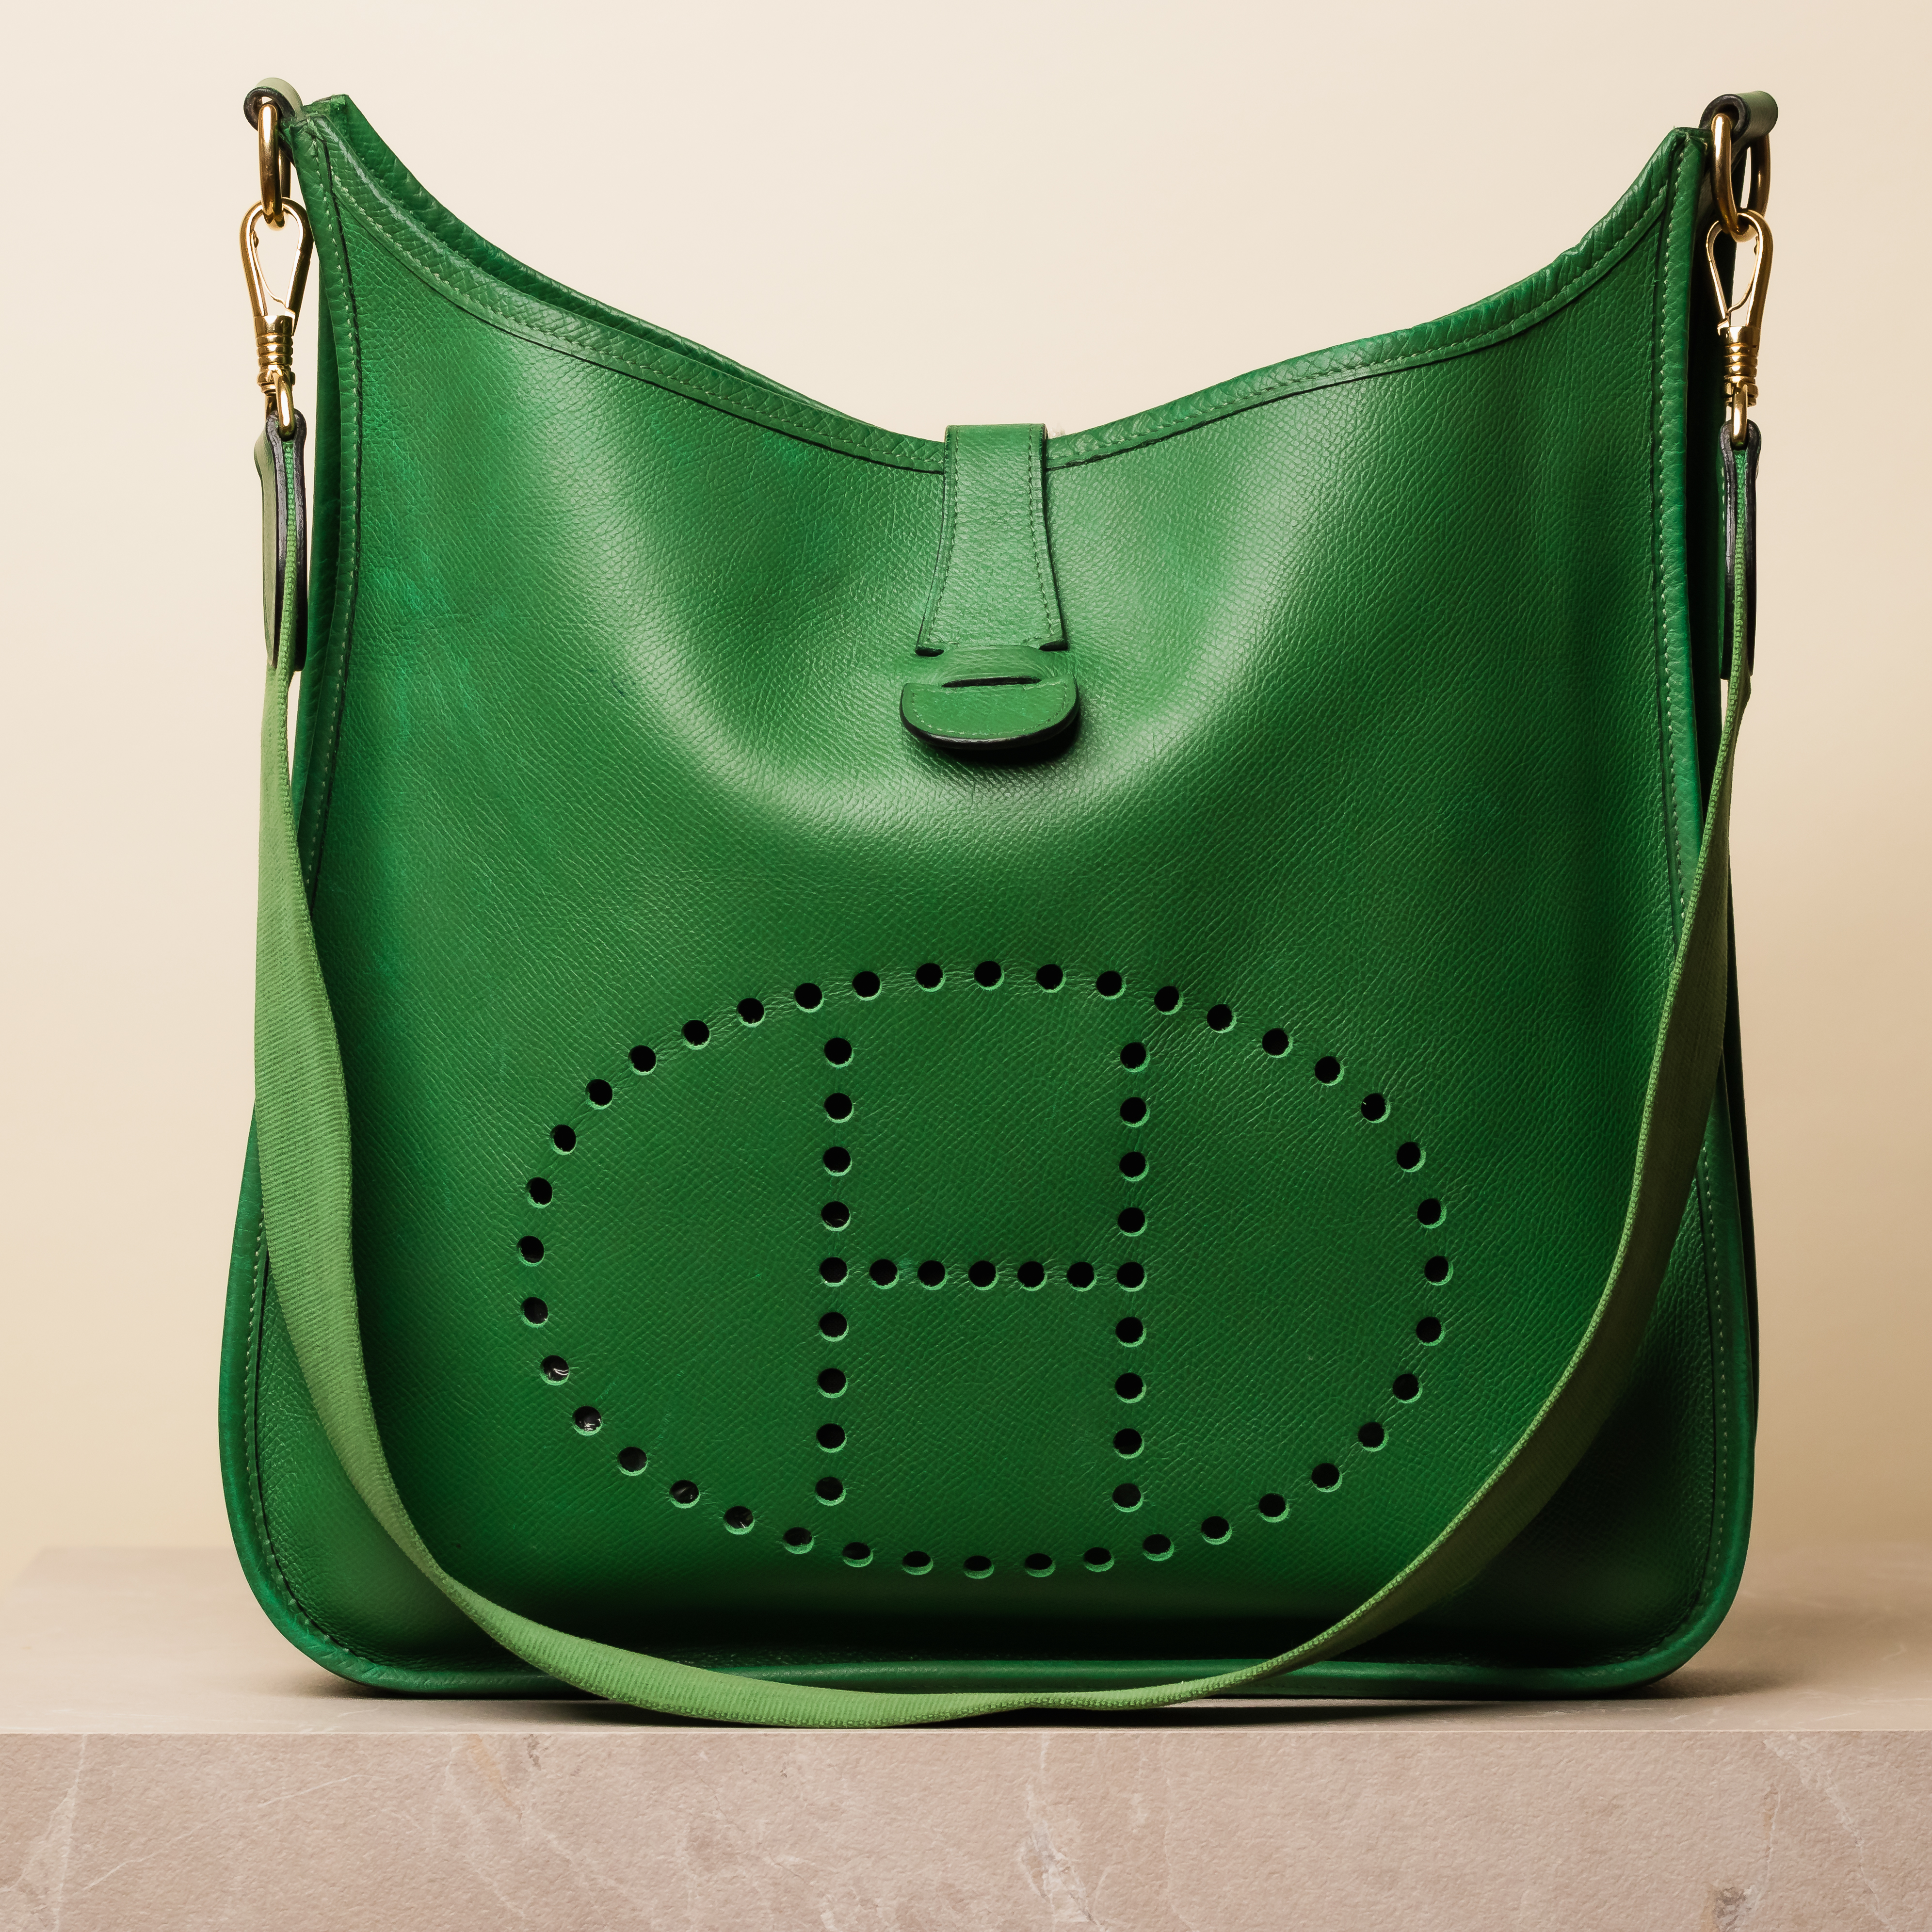 Hermès Evelyne 33 Bag in Irish Green